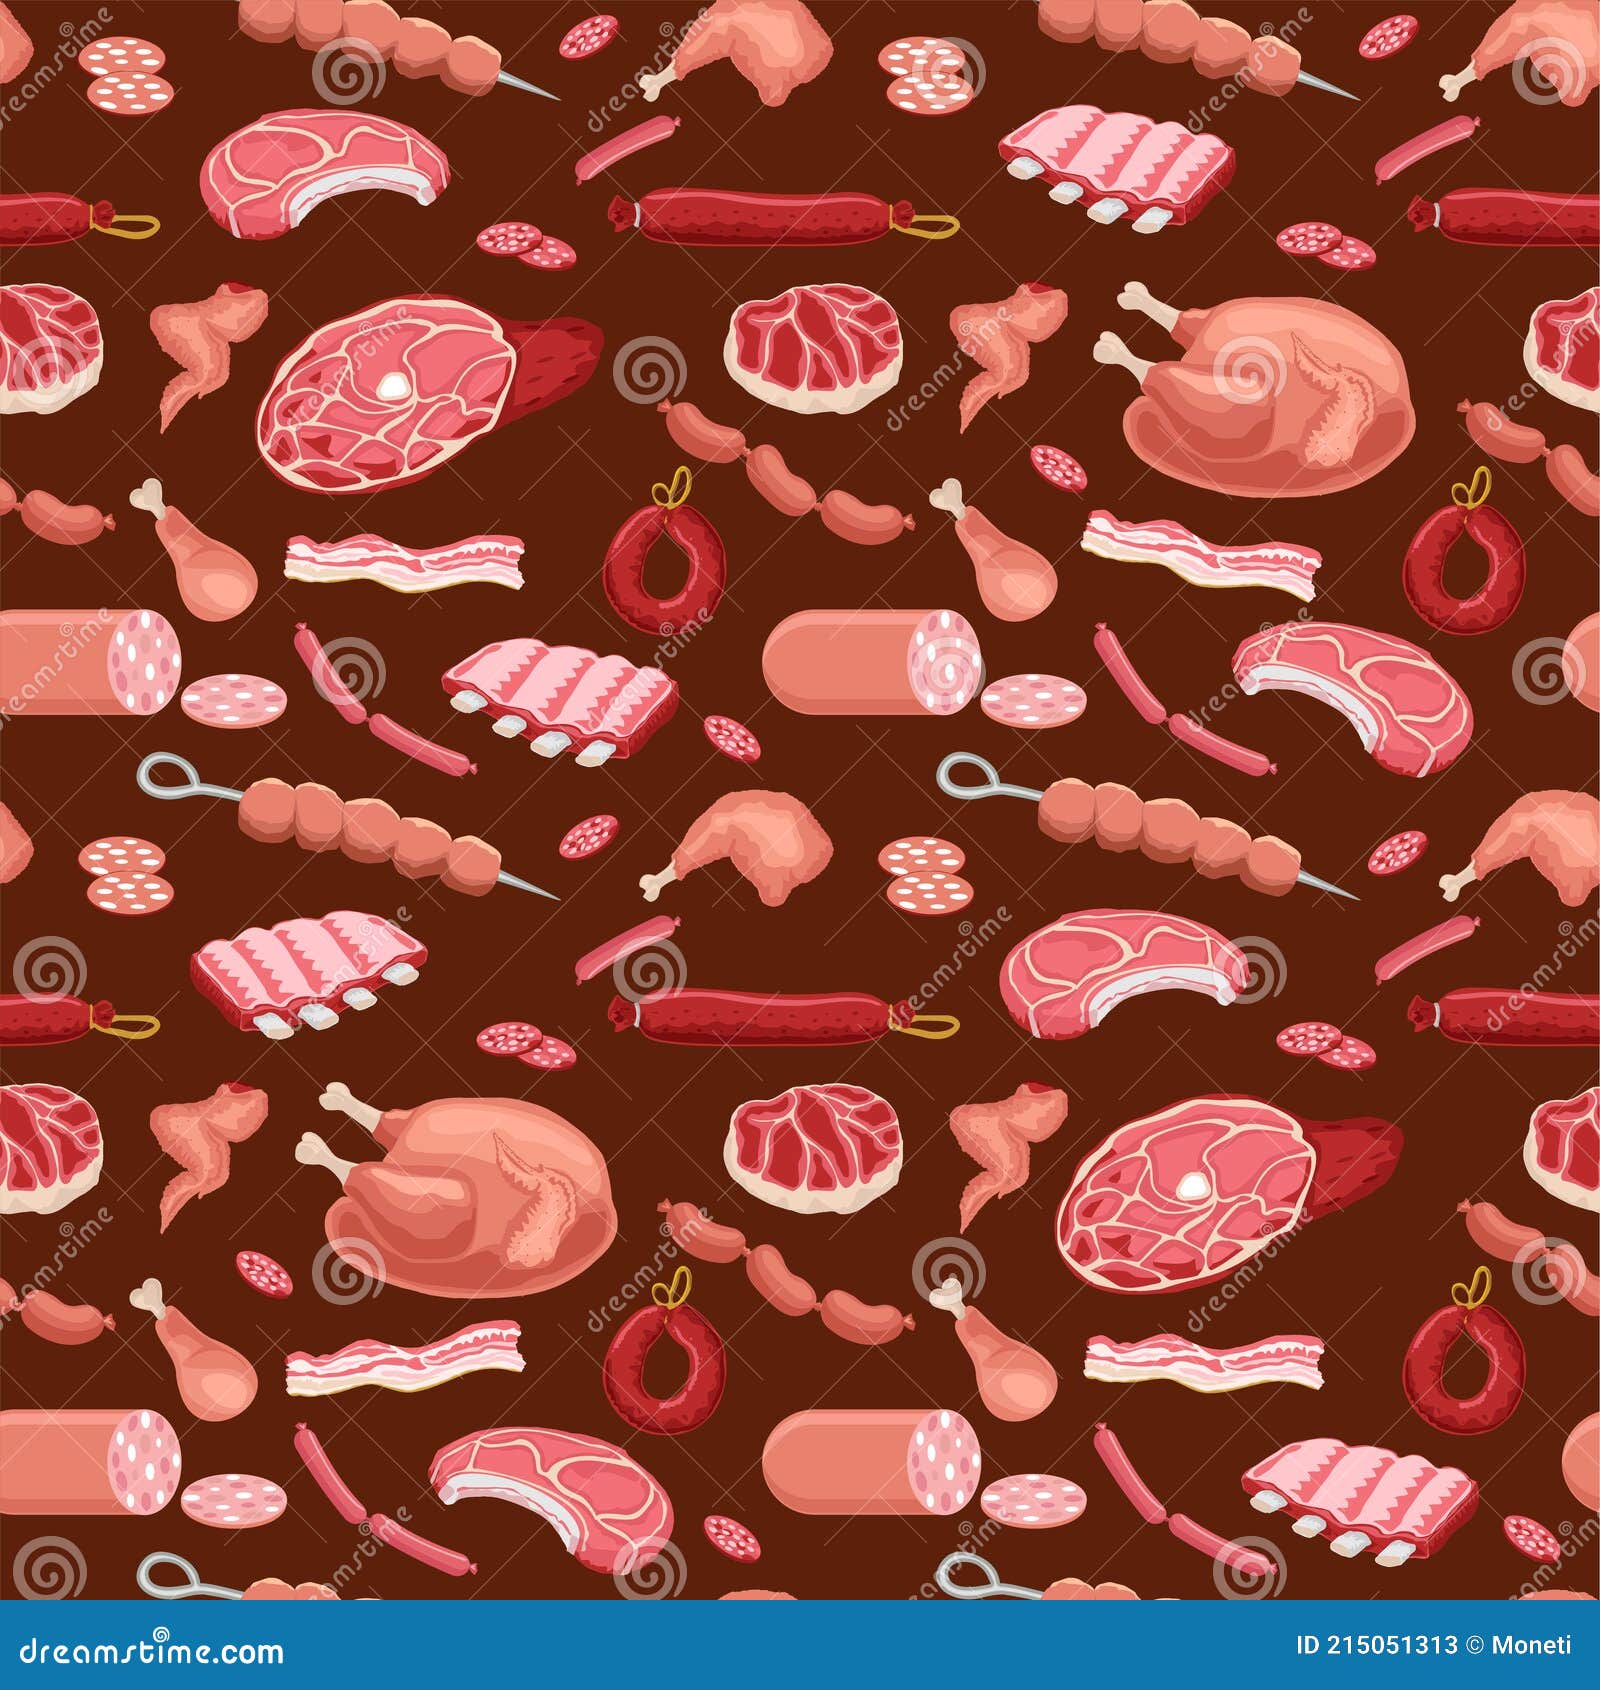 Meat Seamless Pattern. Meat Products Background for Butcher Shop Design  Stock Vector - Illustration of beefsteak, pork: 215051313